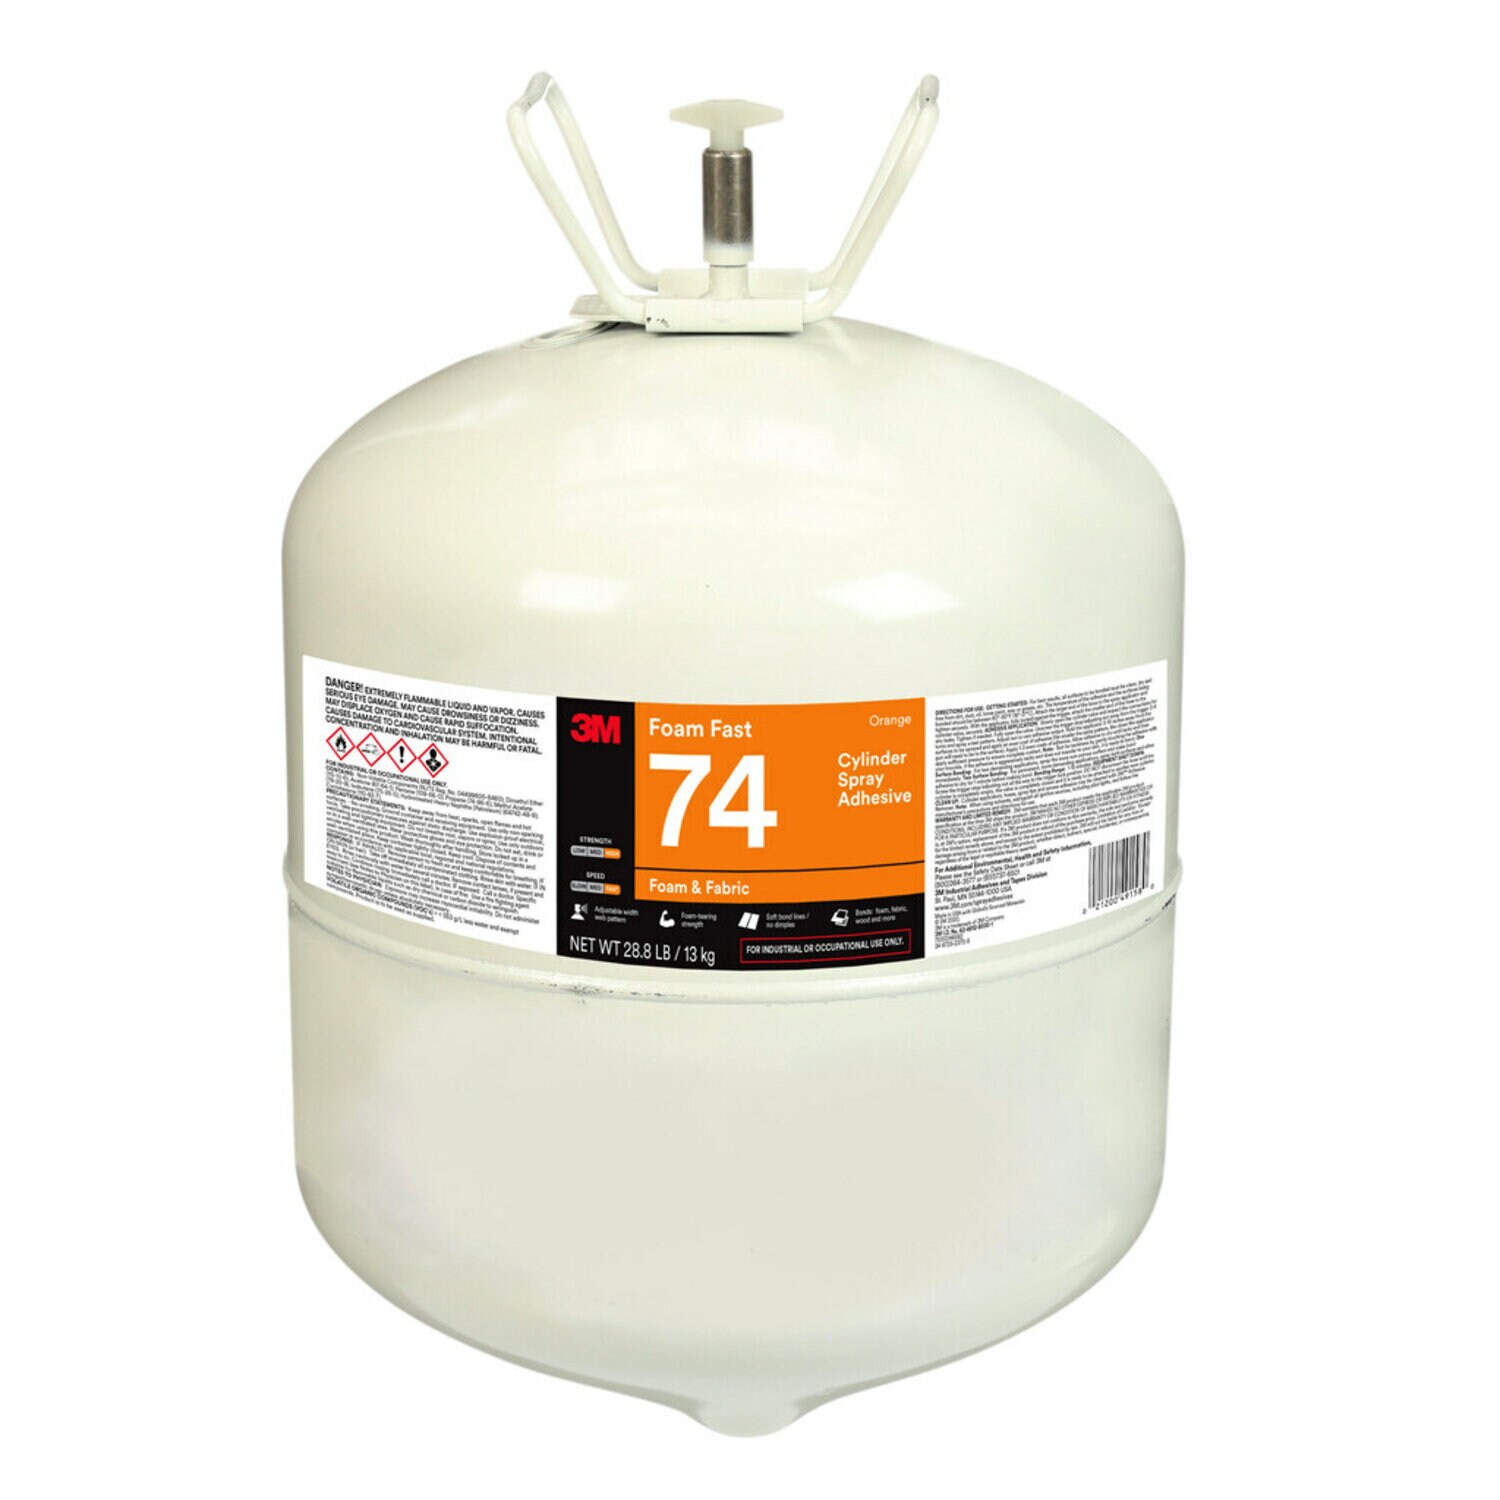 7000046582 - 3M Foam Fast 74 Cylinder Spray Adhesive, Orange, Large Cylinder (Net Wt
28.8 lb), 1/case